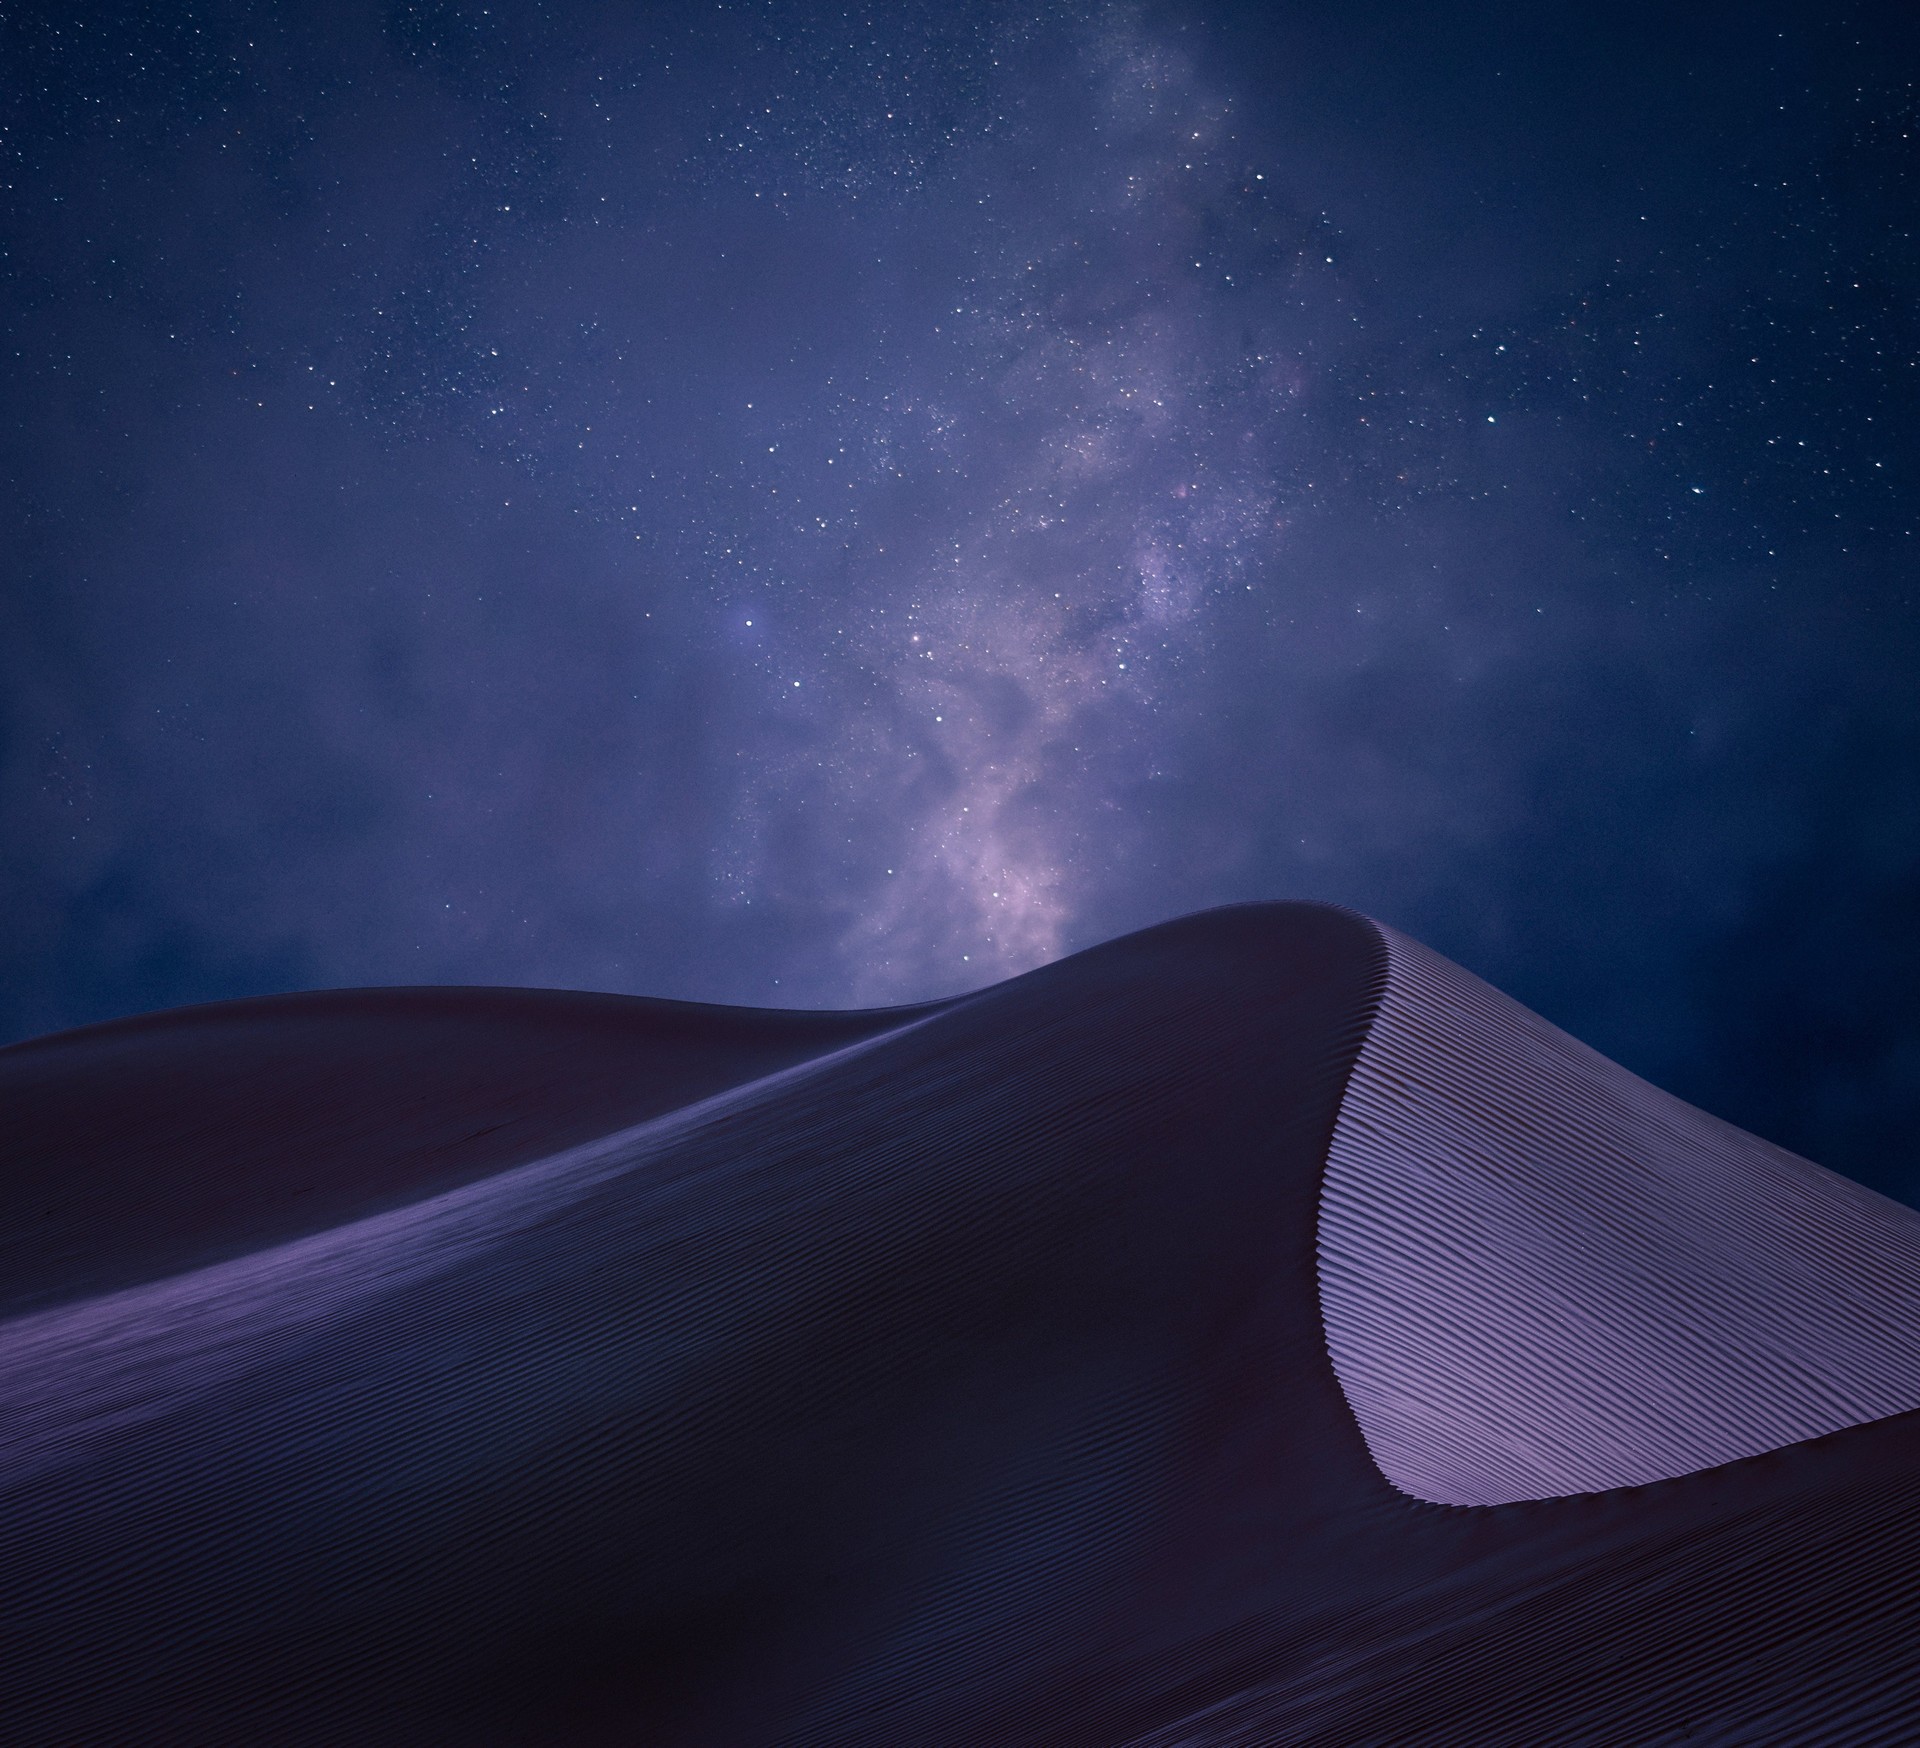 Звёздное небо над дюнами. Финалист, 2019. Автор Питер Адам Хосзанг